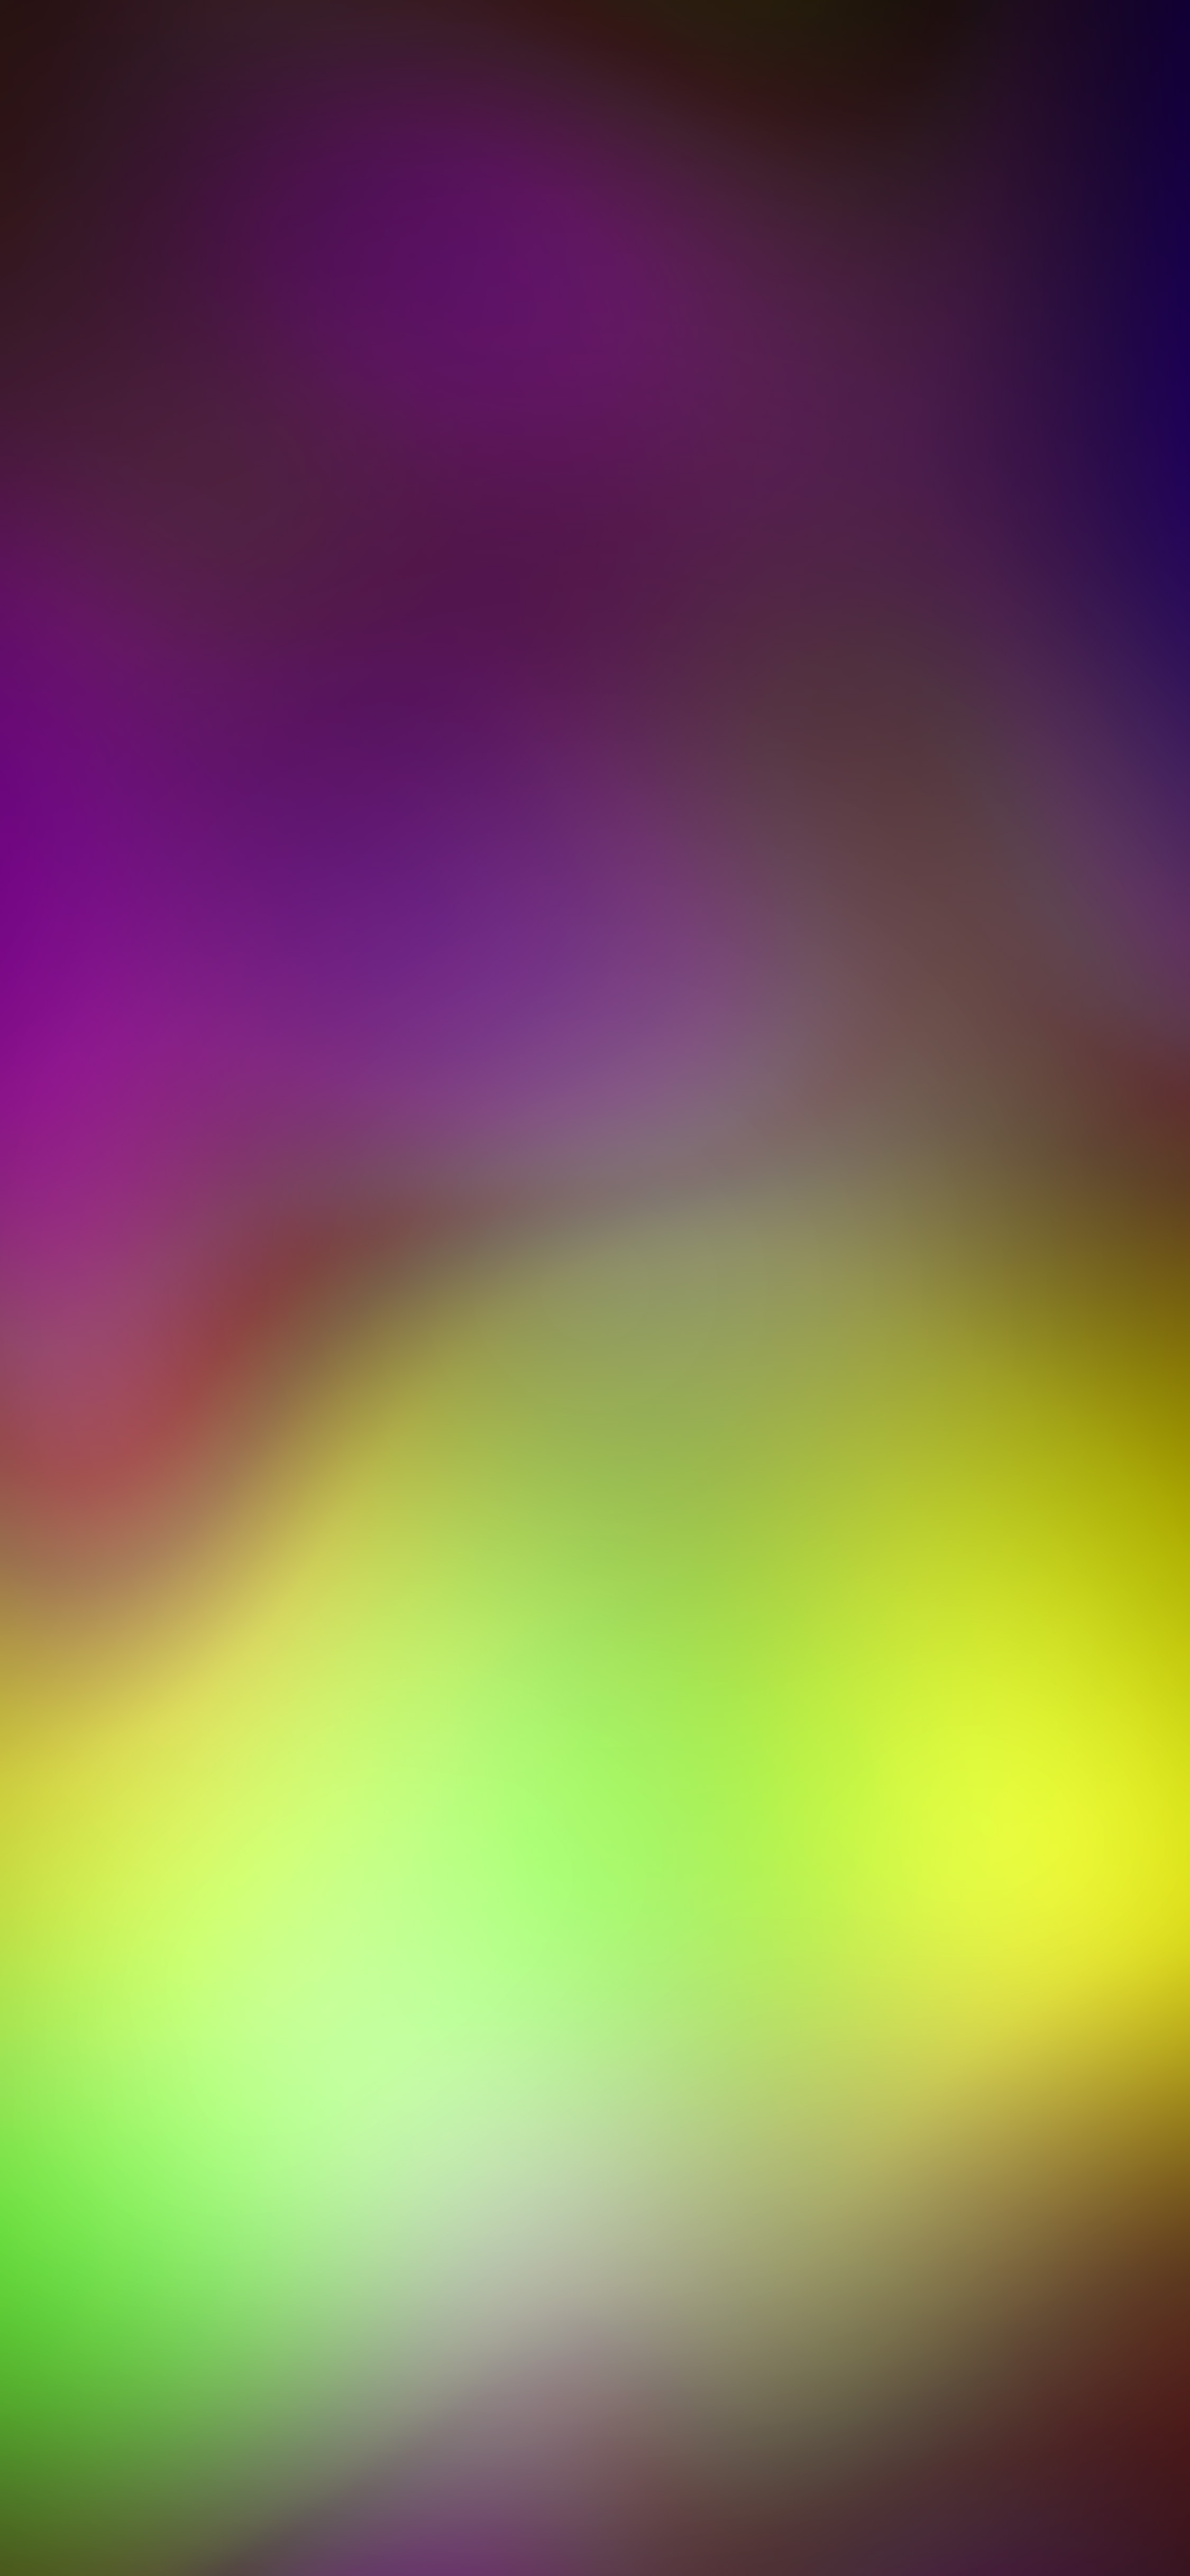 General 2250x4872 iPod iPhone iPad iOS colorful vertical portrait display